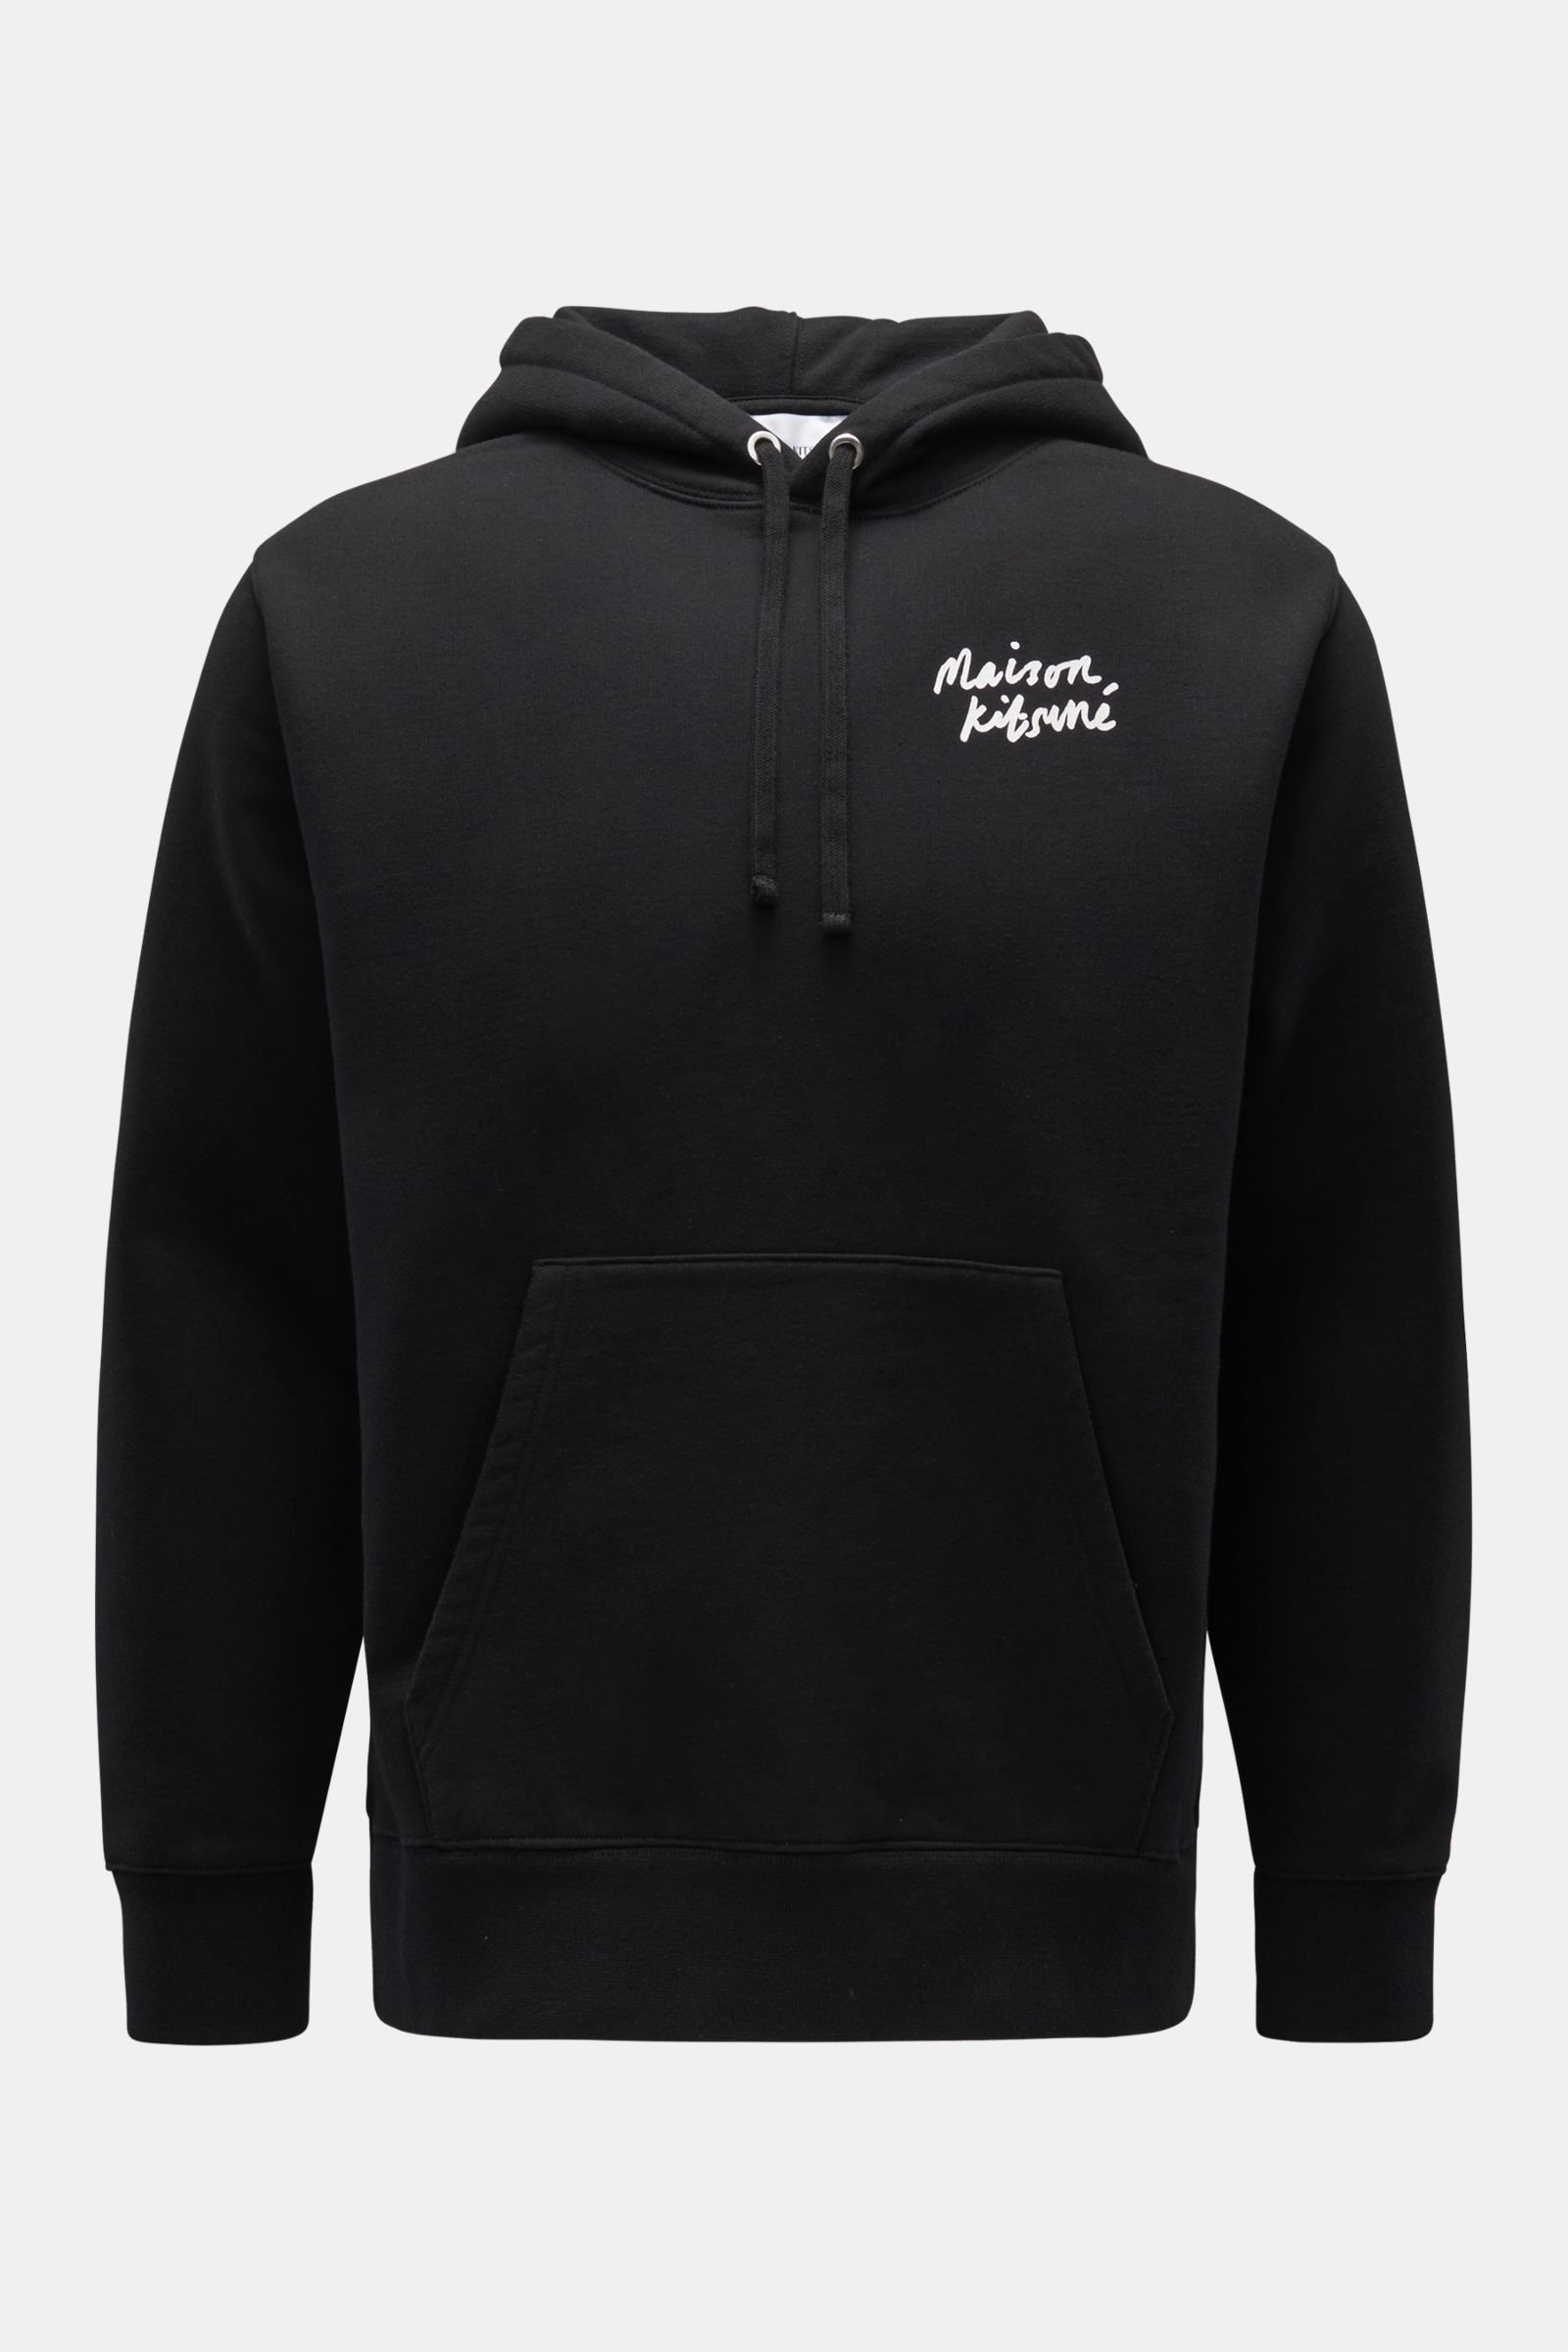 MAISON KITSUNÉ hooded jumper black | BRAUN Hamburg